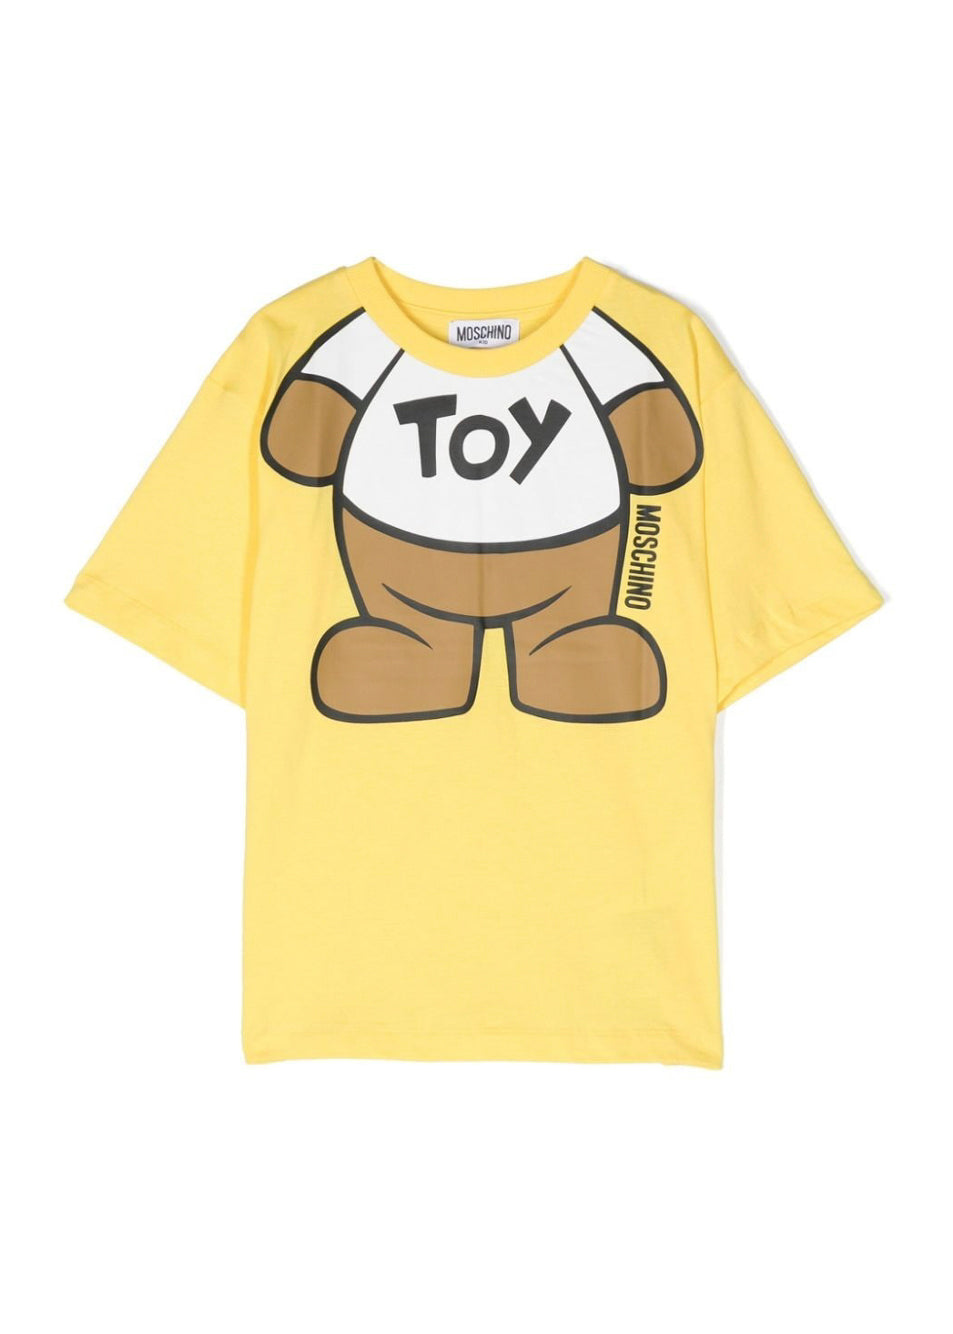 Moschino Kids T-shirt Gialla con Stampa per Bambini (fronte)